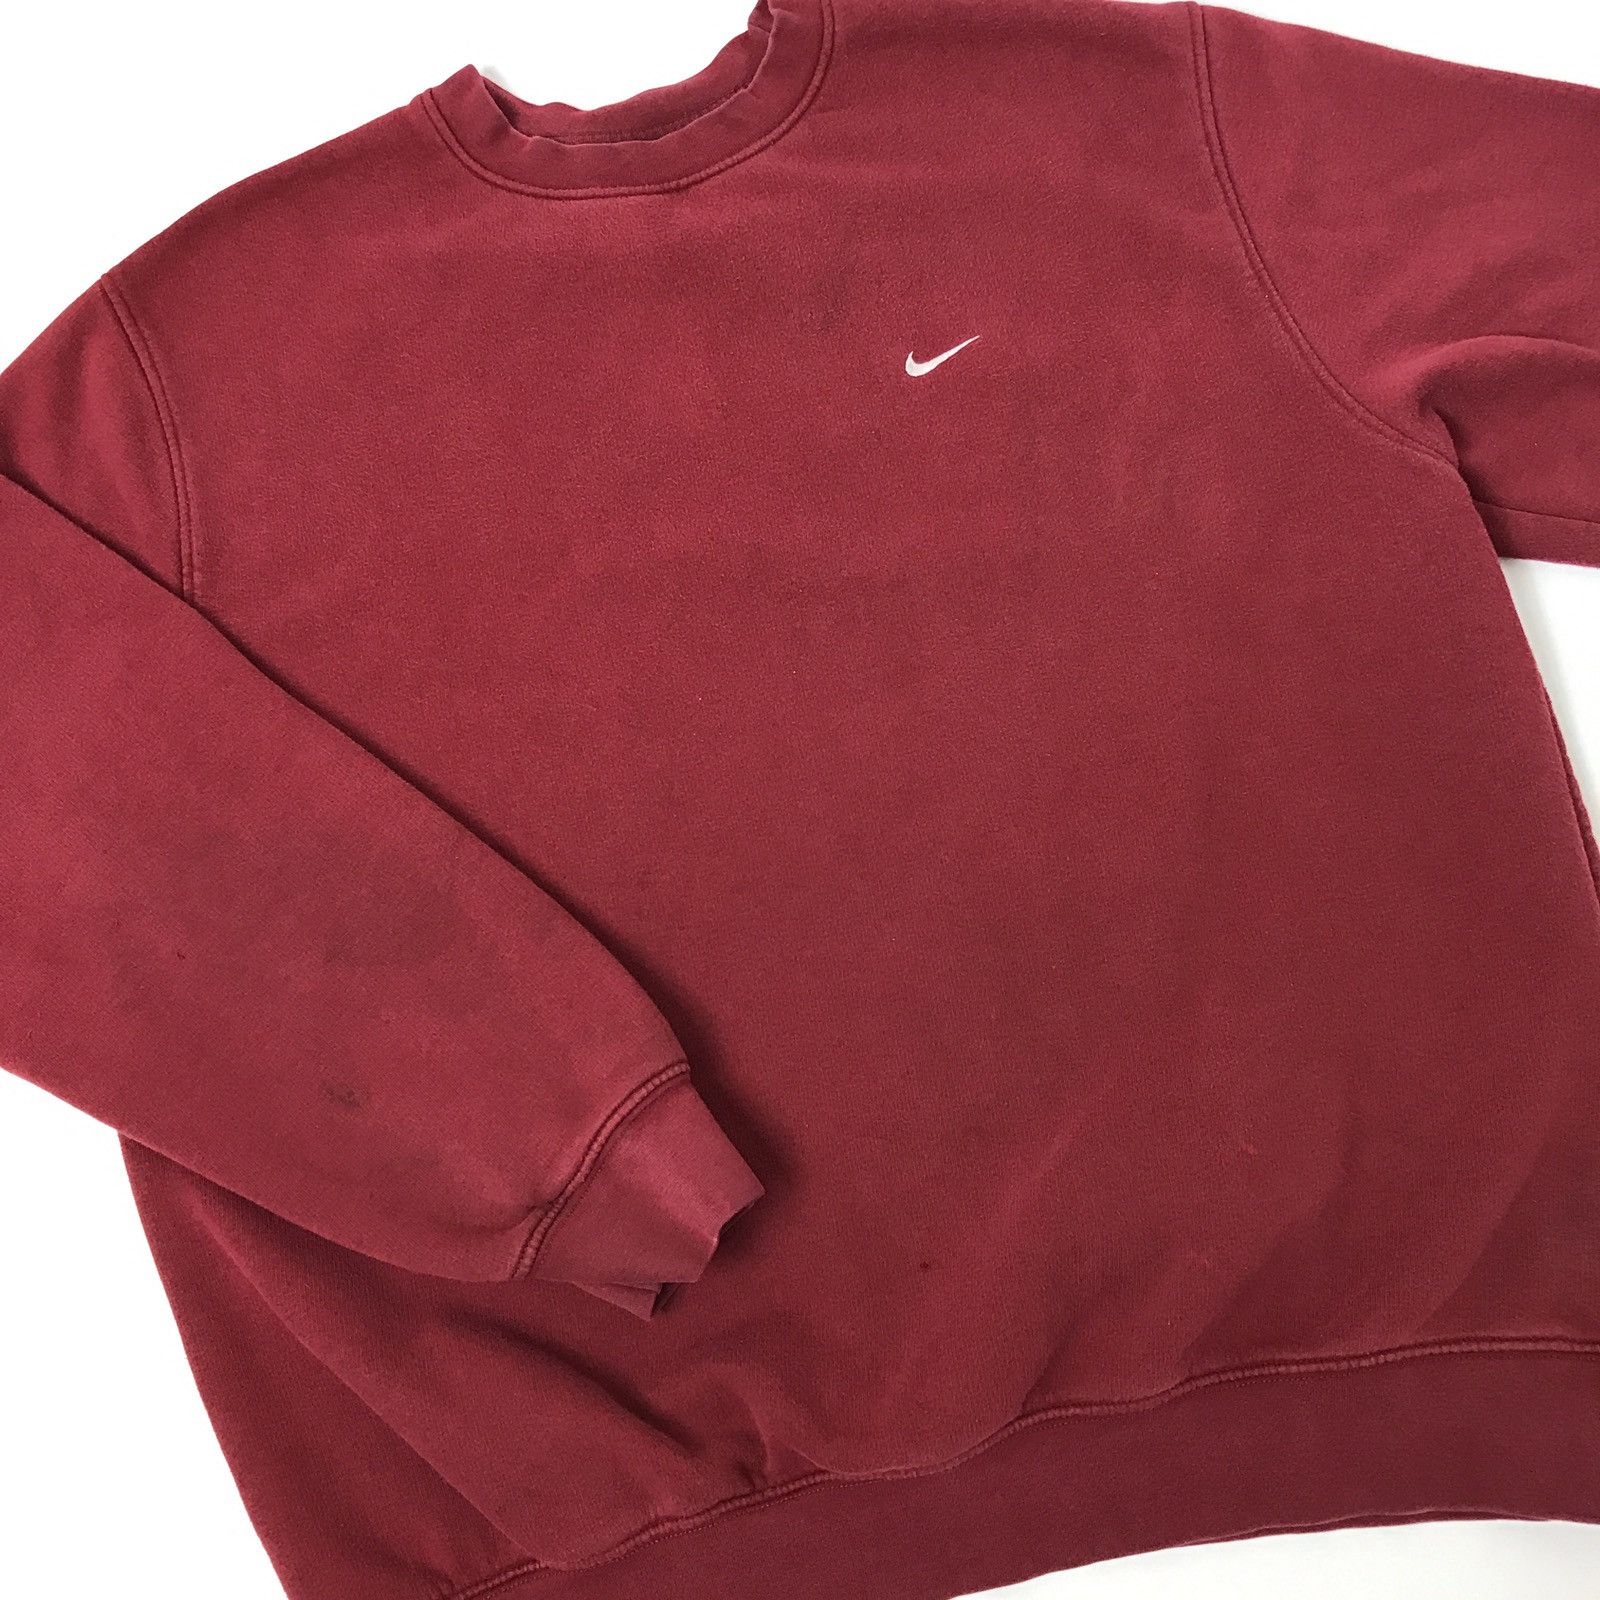 Nike Nike maroon embroidered crewneck sweatshirt Size US XL / EU 56 / 4 - 1 Preview